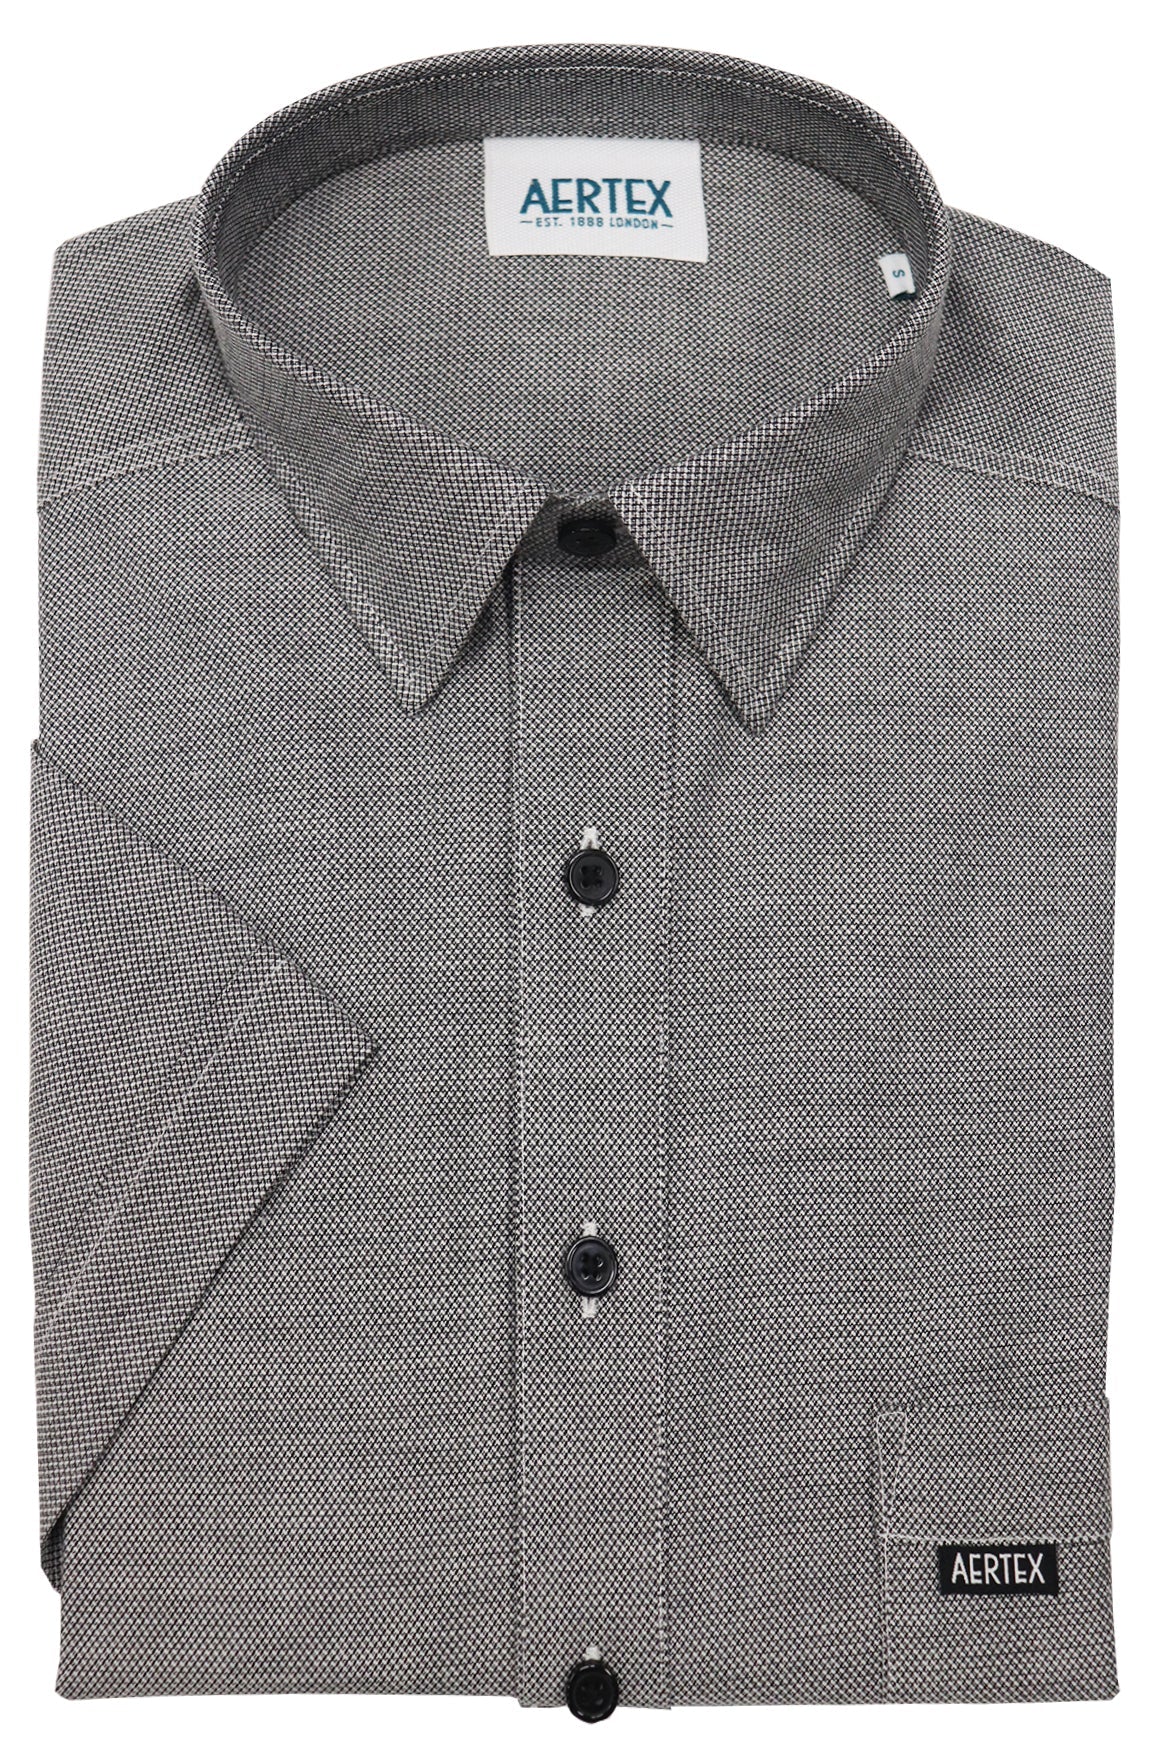 Aertex 86525 Taunton Polo - Thomson's Suits Ltd - Plaster - S - 3305